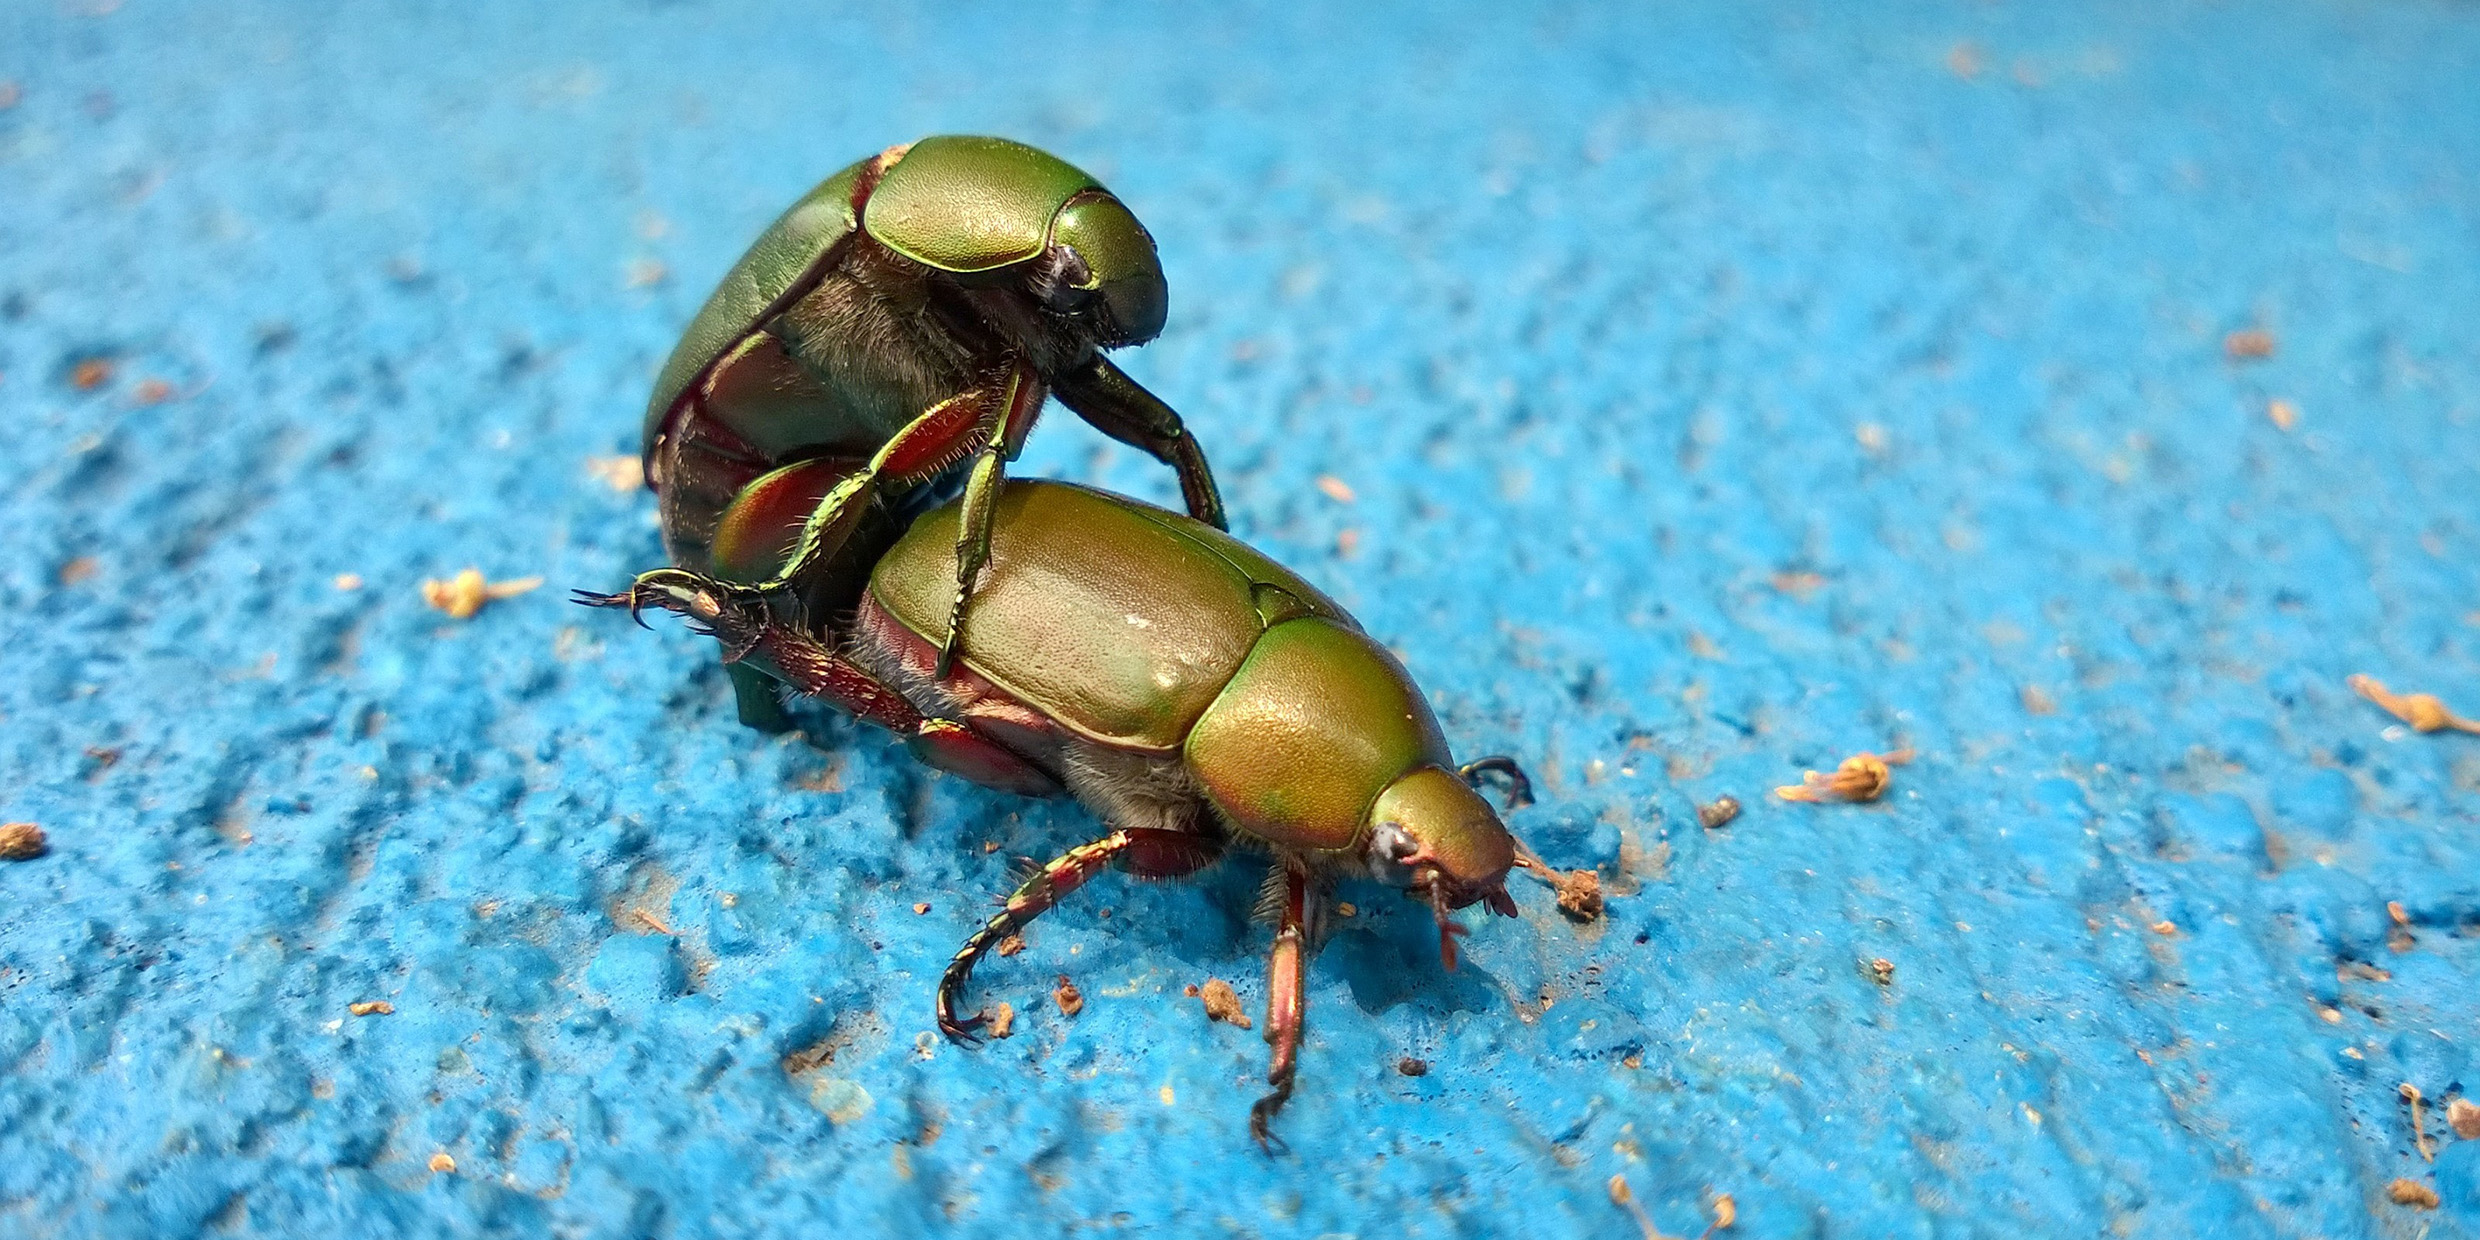 Image of mating beetles